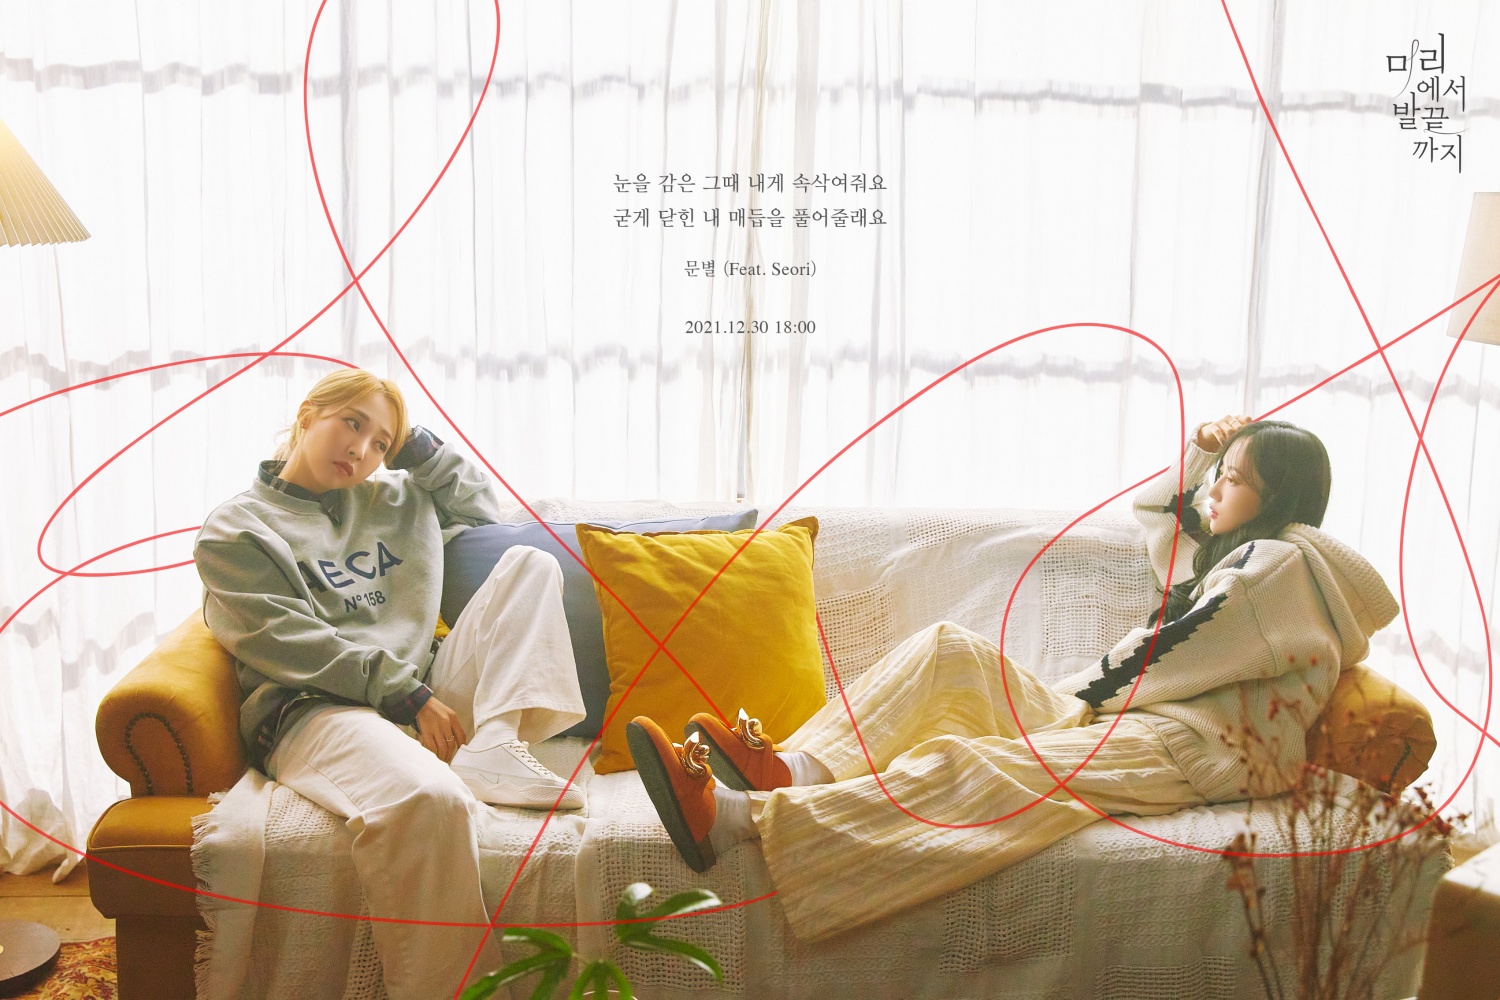 Mamamoo MoonByul X Seori, 3rd Mini Album [6equence] concept photo released… red thread of fate